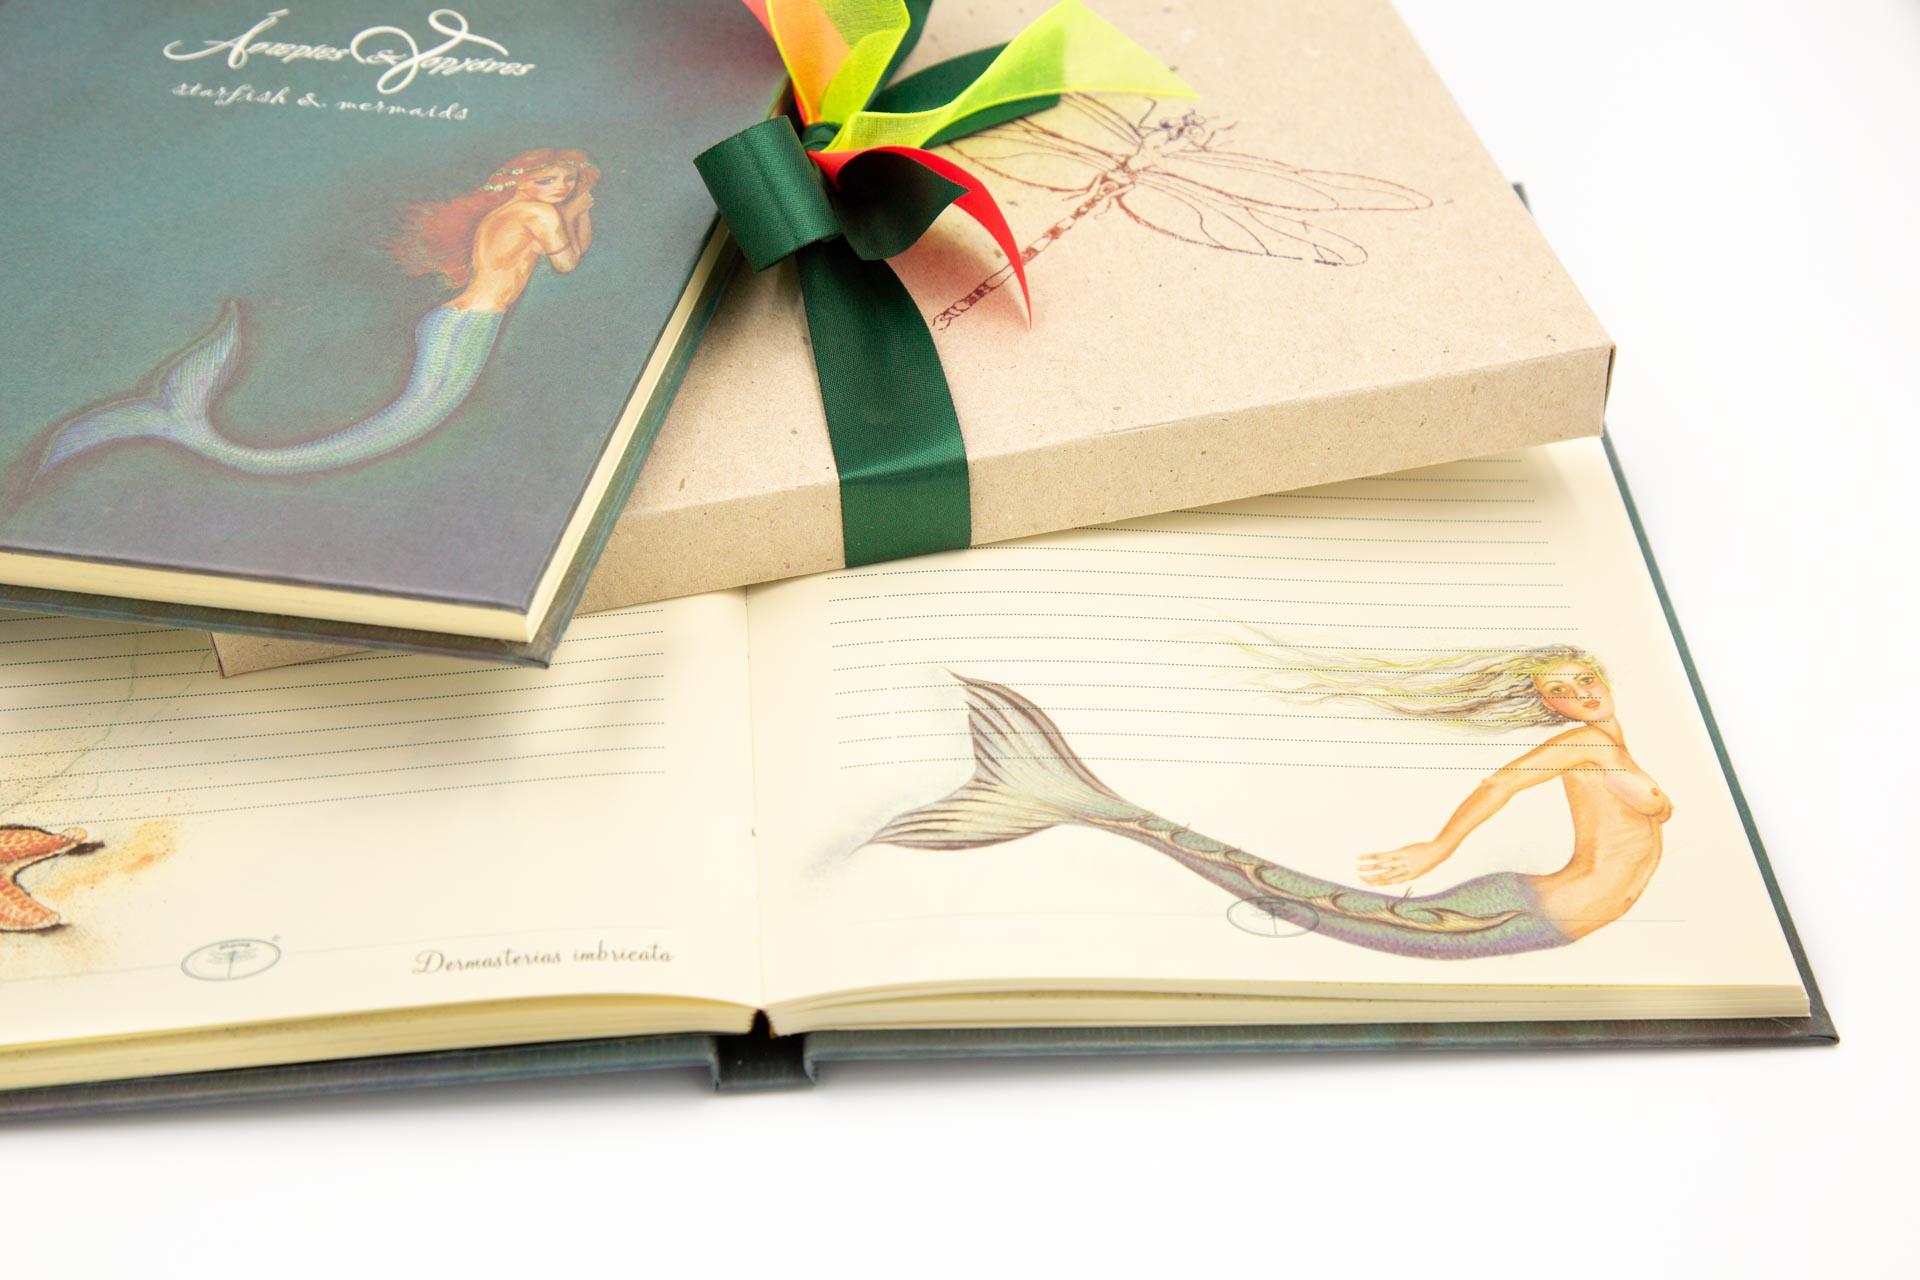 Personal notebook "Starfish & Mermaids" - Details